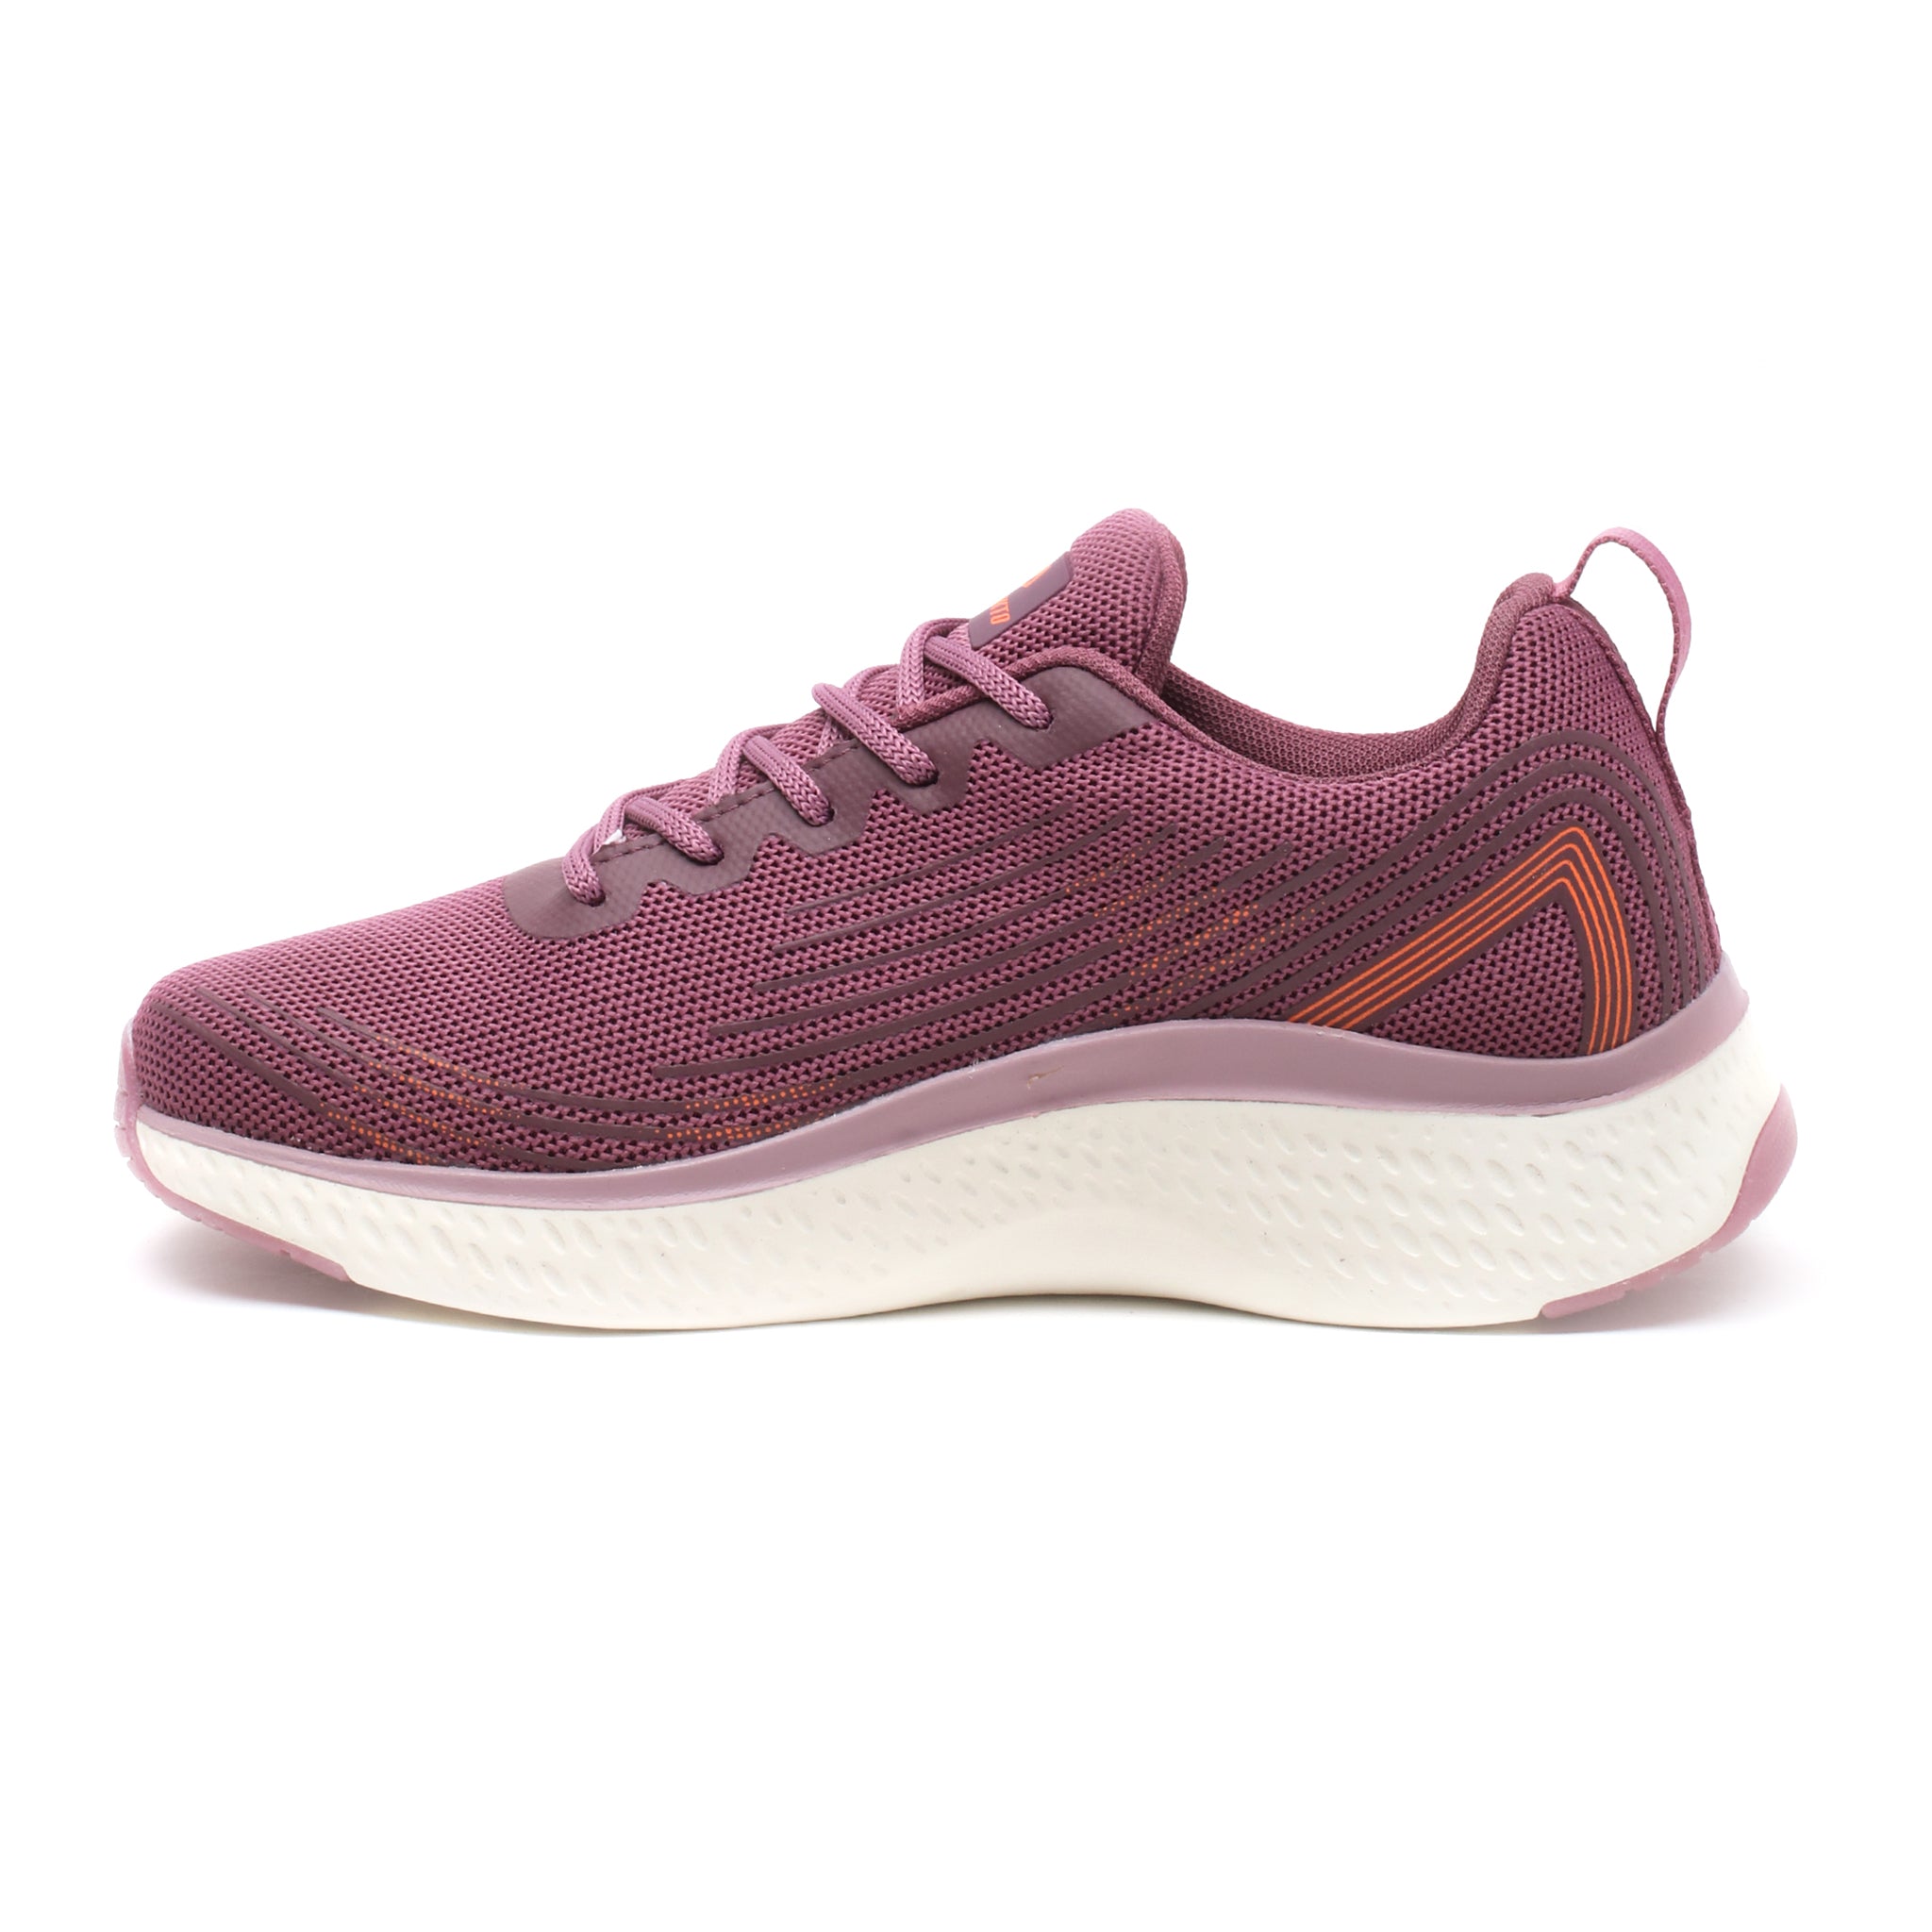 Impakto Women's Purple Running Shoes